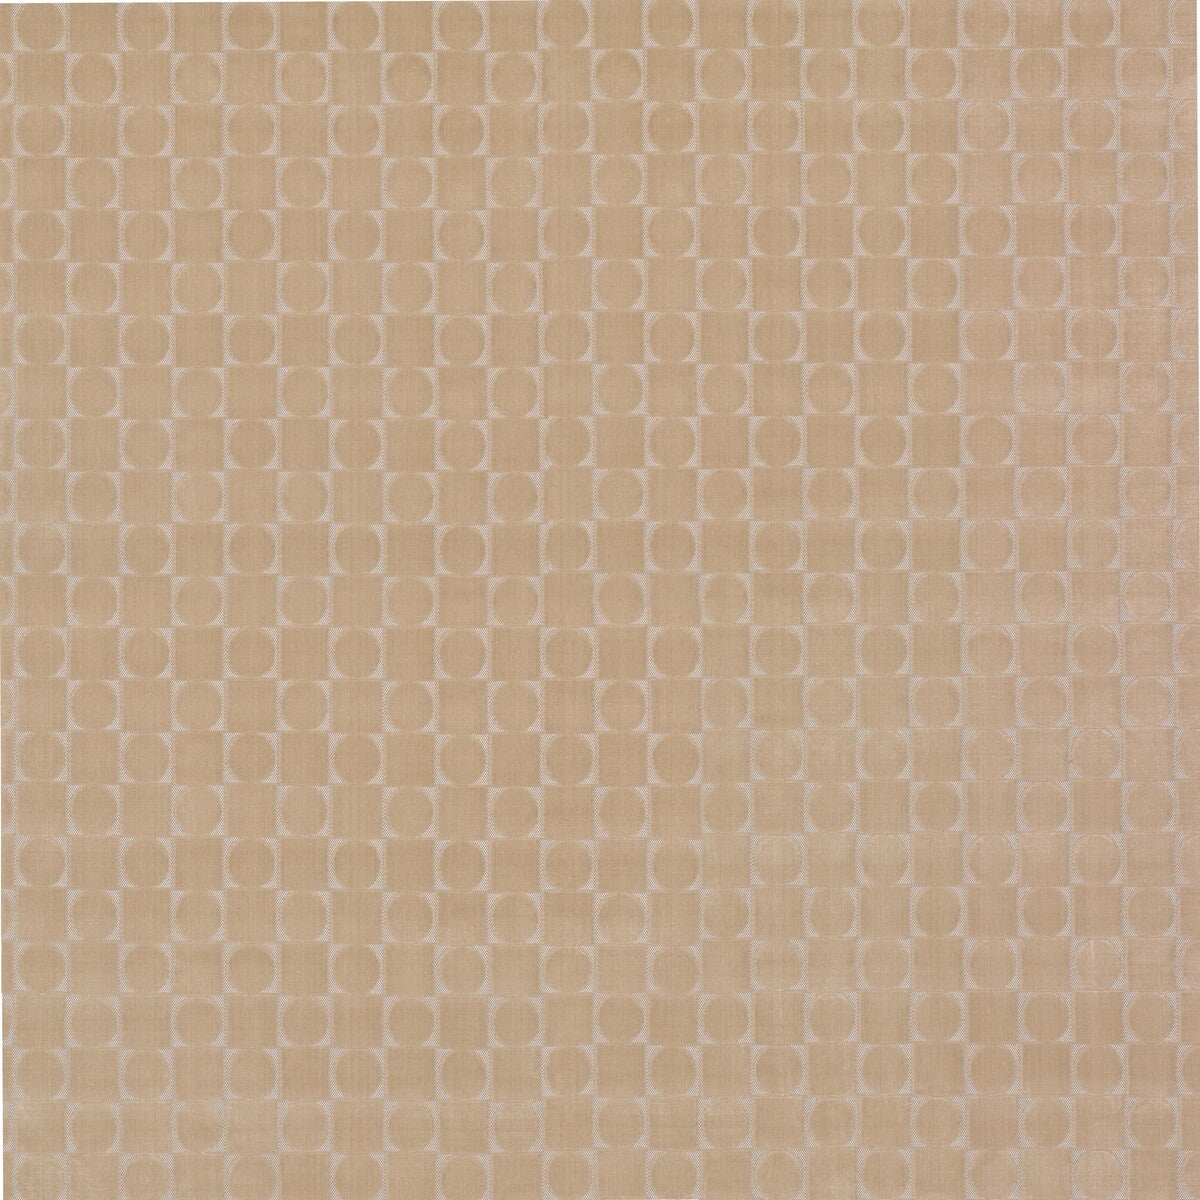 Luigi fabric in crudo color - pattern LCT4453.006.0 - by Gaston y Daniela in the Lorenzo Castillo III collection